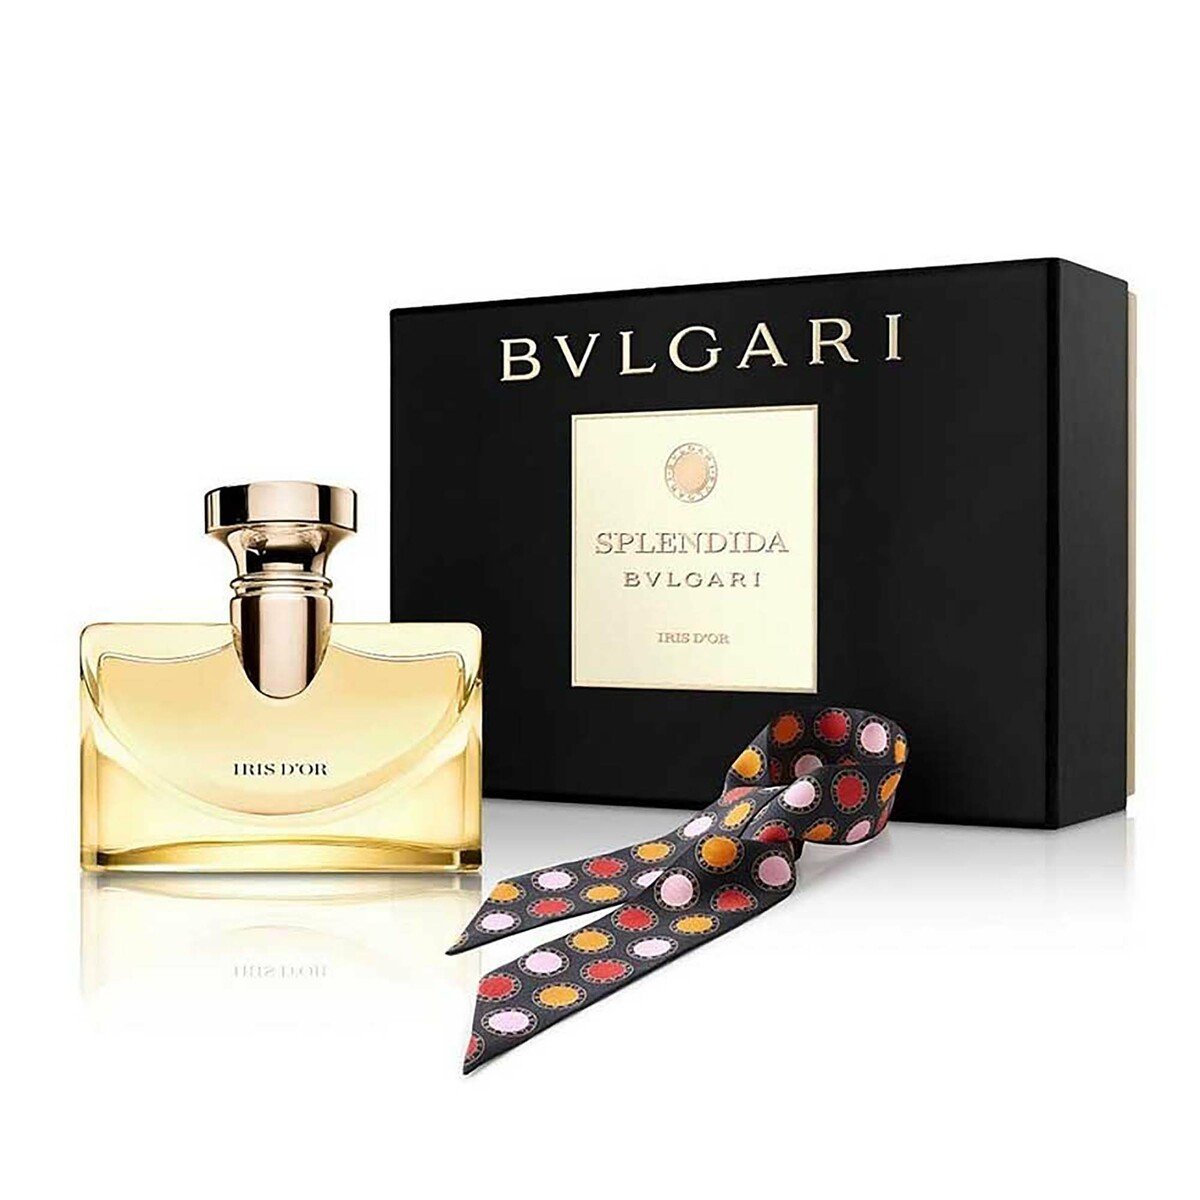 BVLGARI Splendida Iris D'or Eau De Parfum For Women, 100ml + Scarf Set